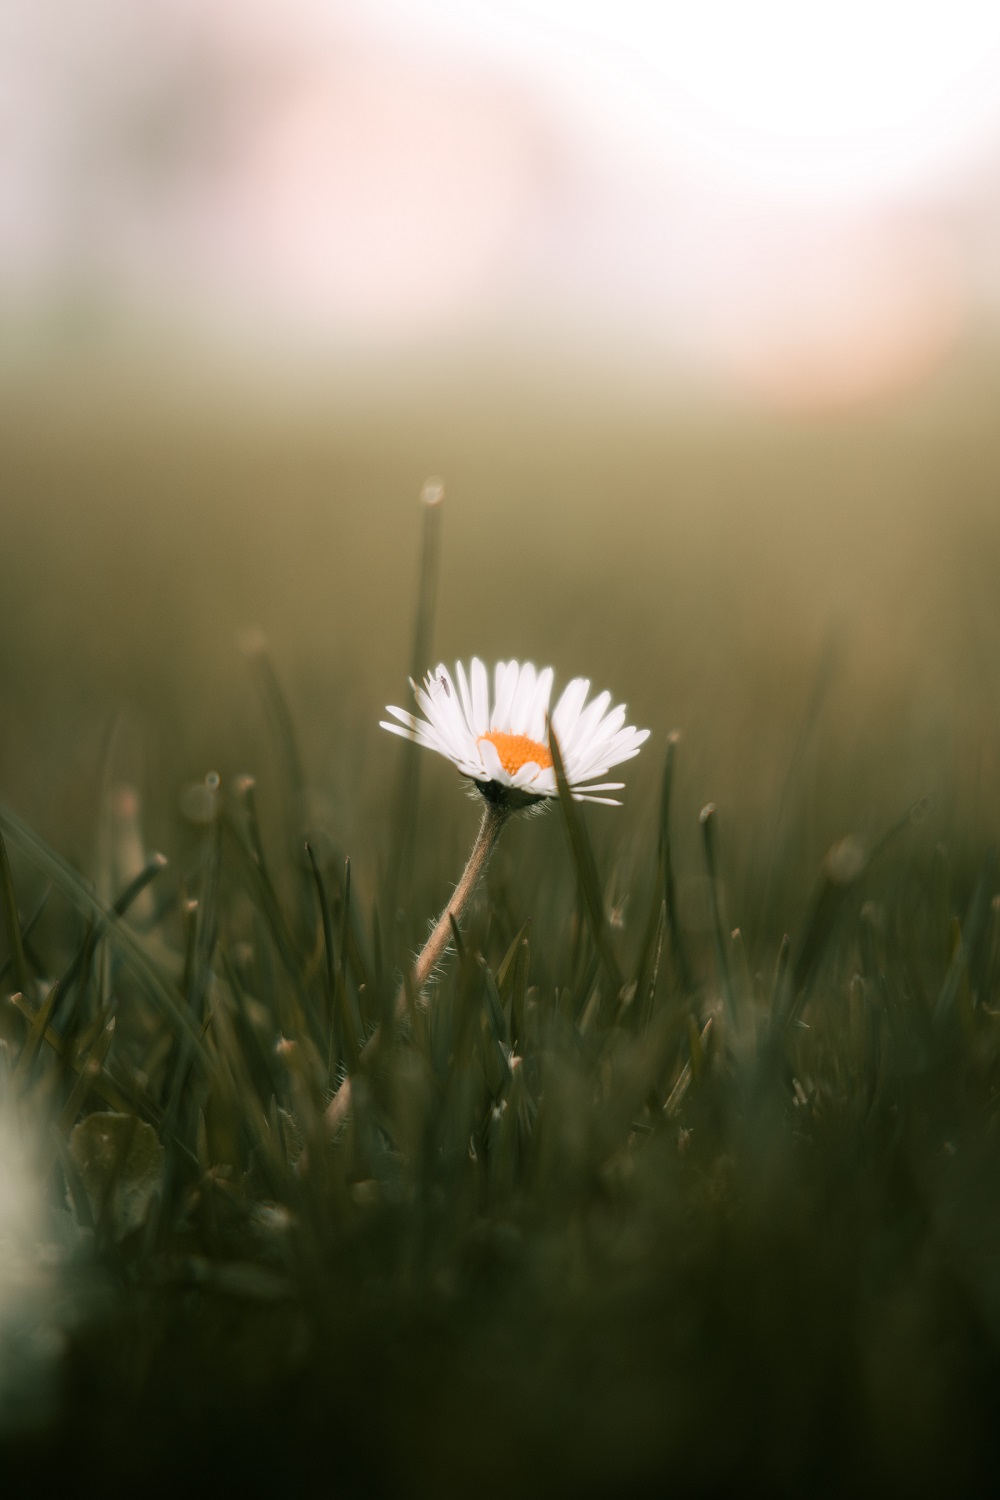 A white daisy flower in grass.